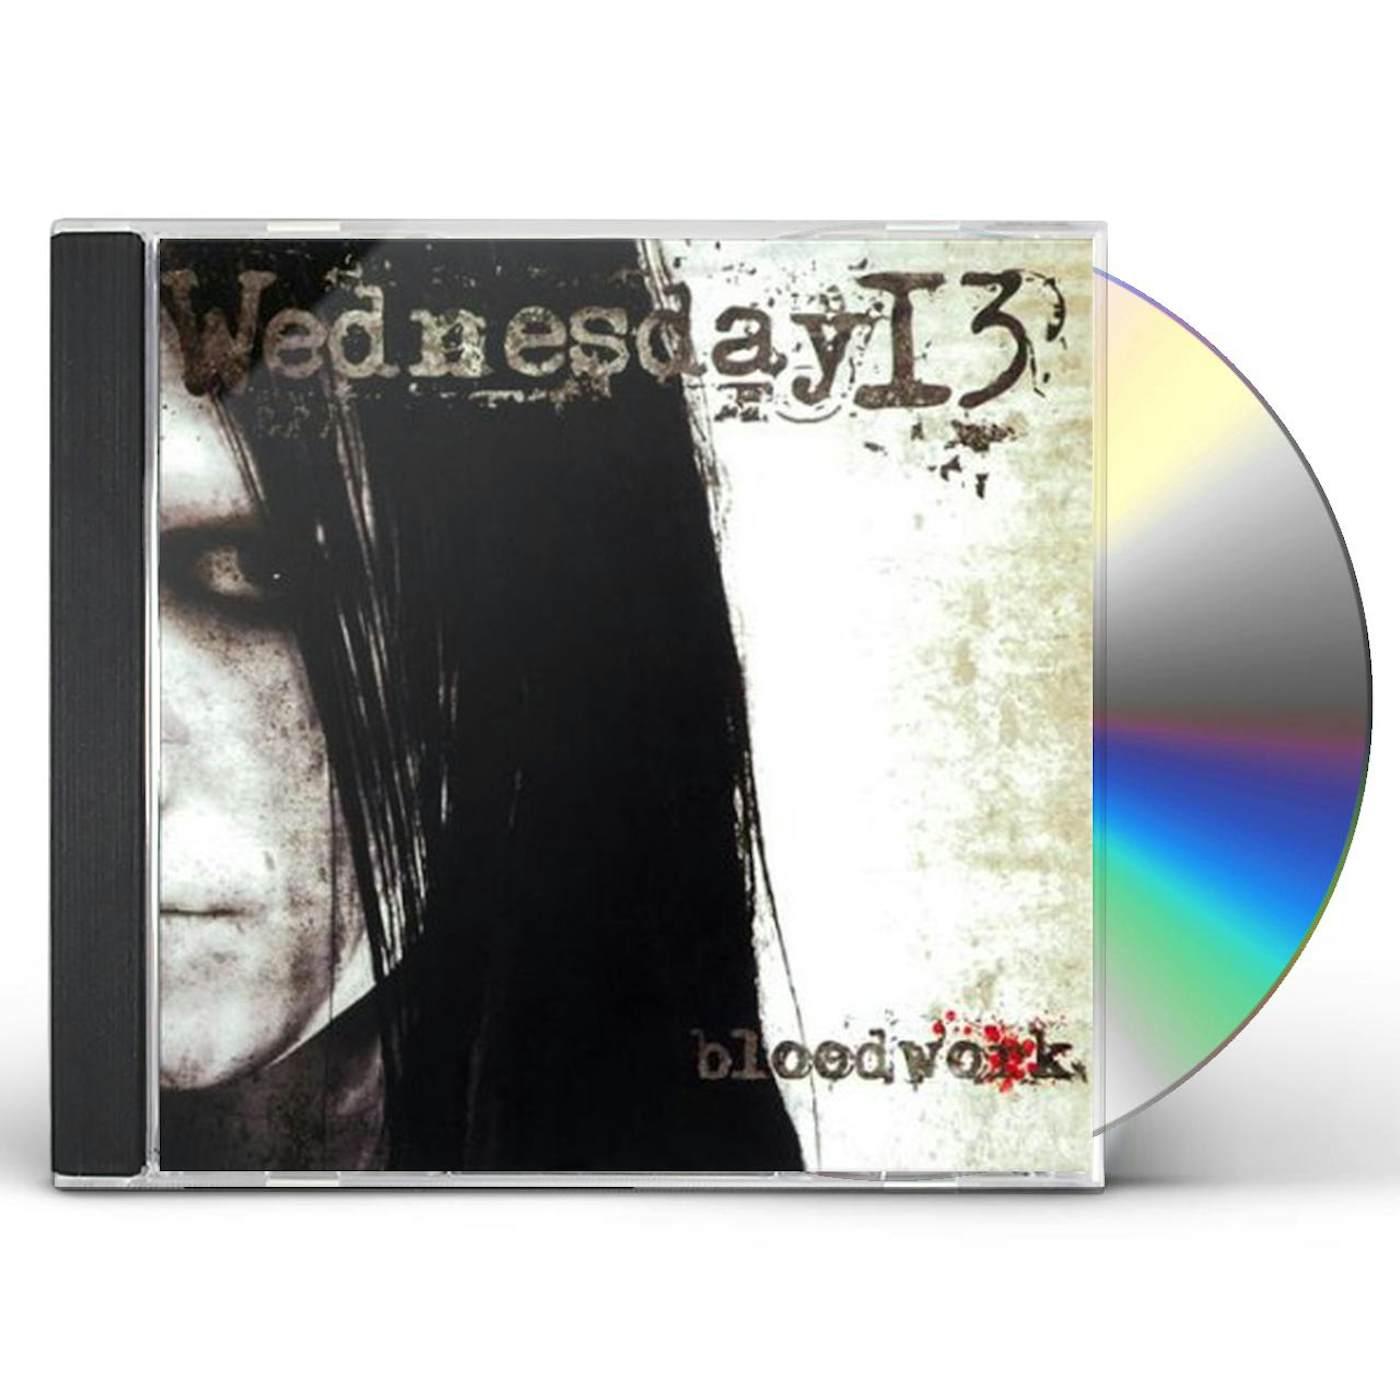 Wednesday 13 BLOODWORK CD